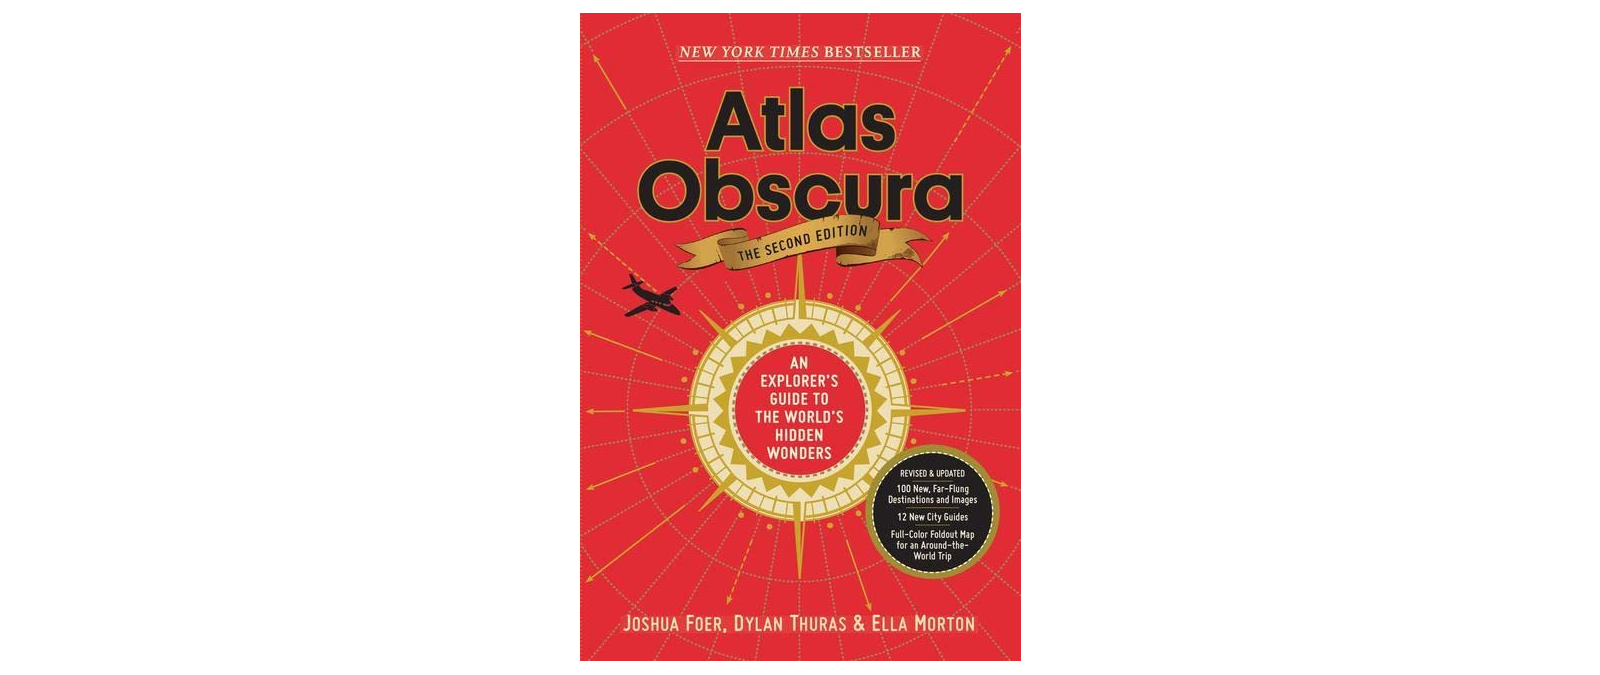 Atals_Obscura_Amazon